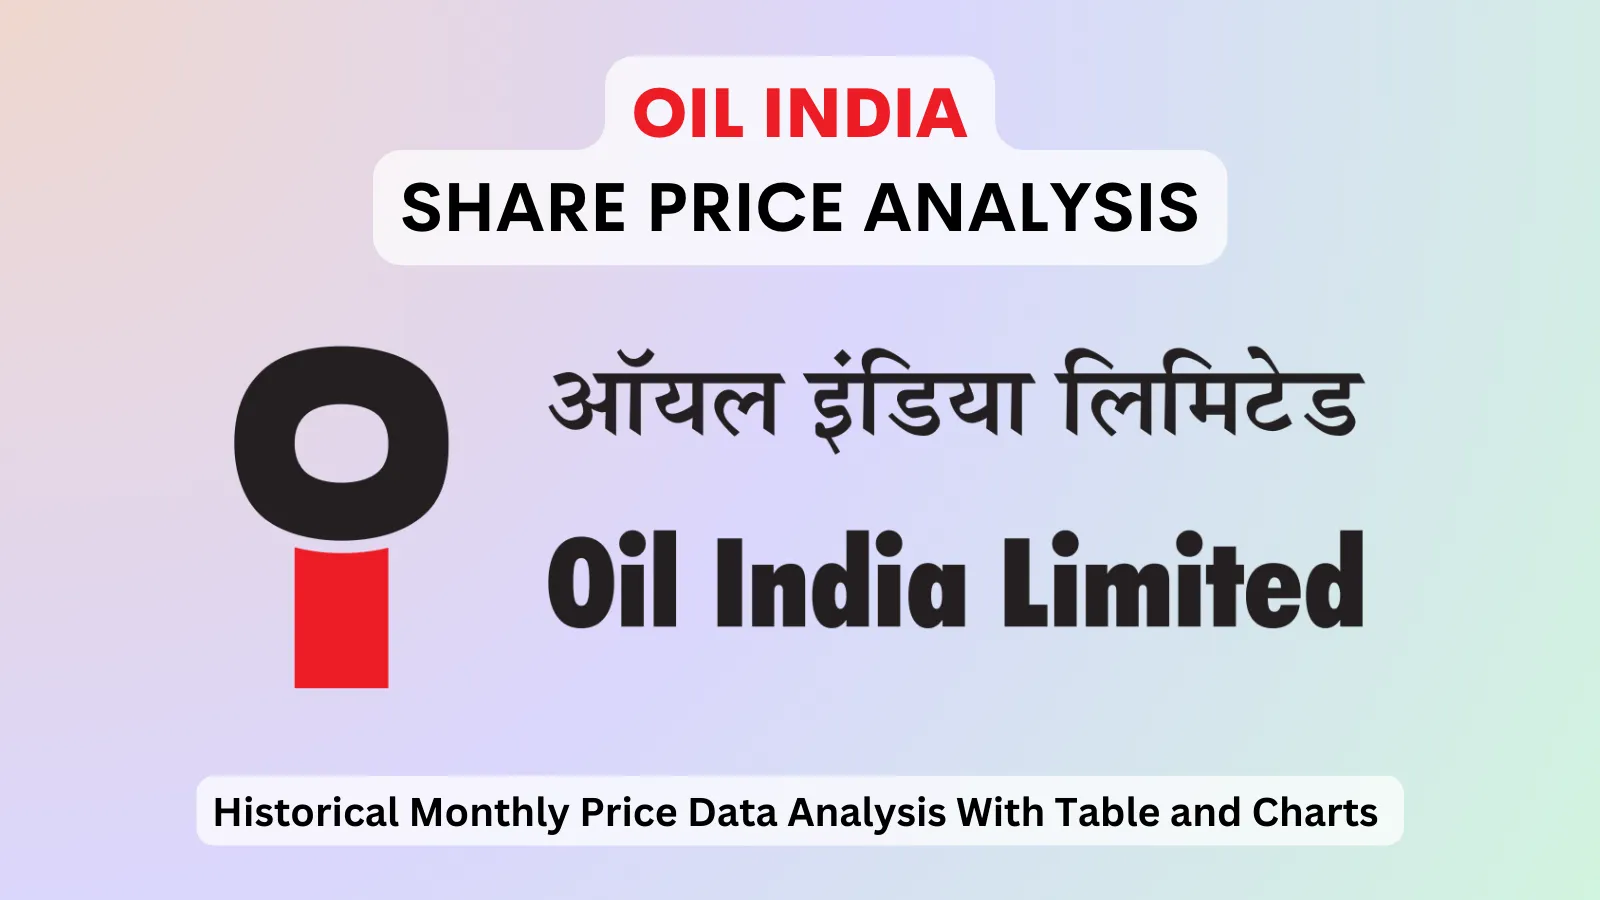 Oil India Ltd. share price analysis